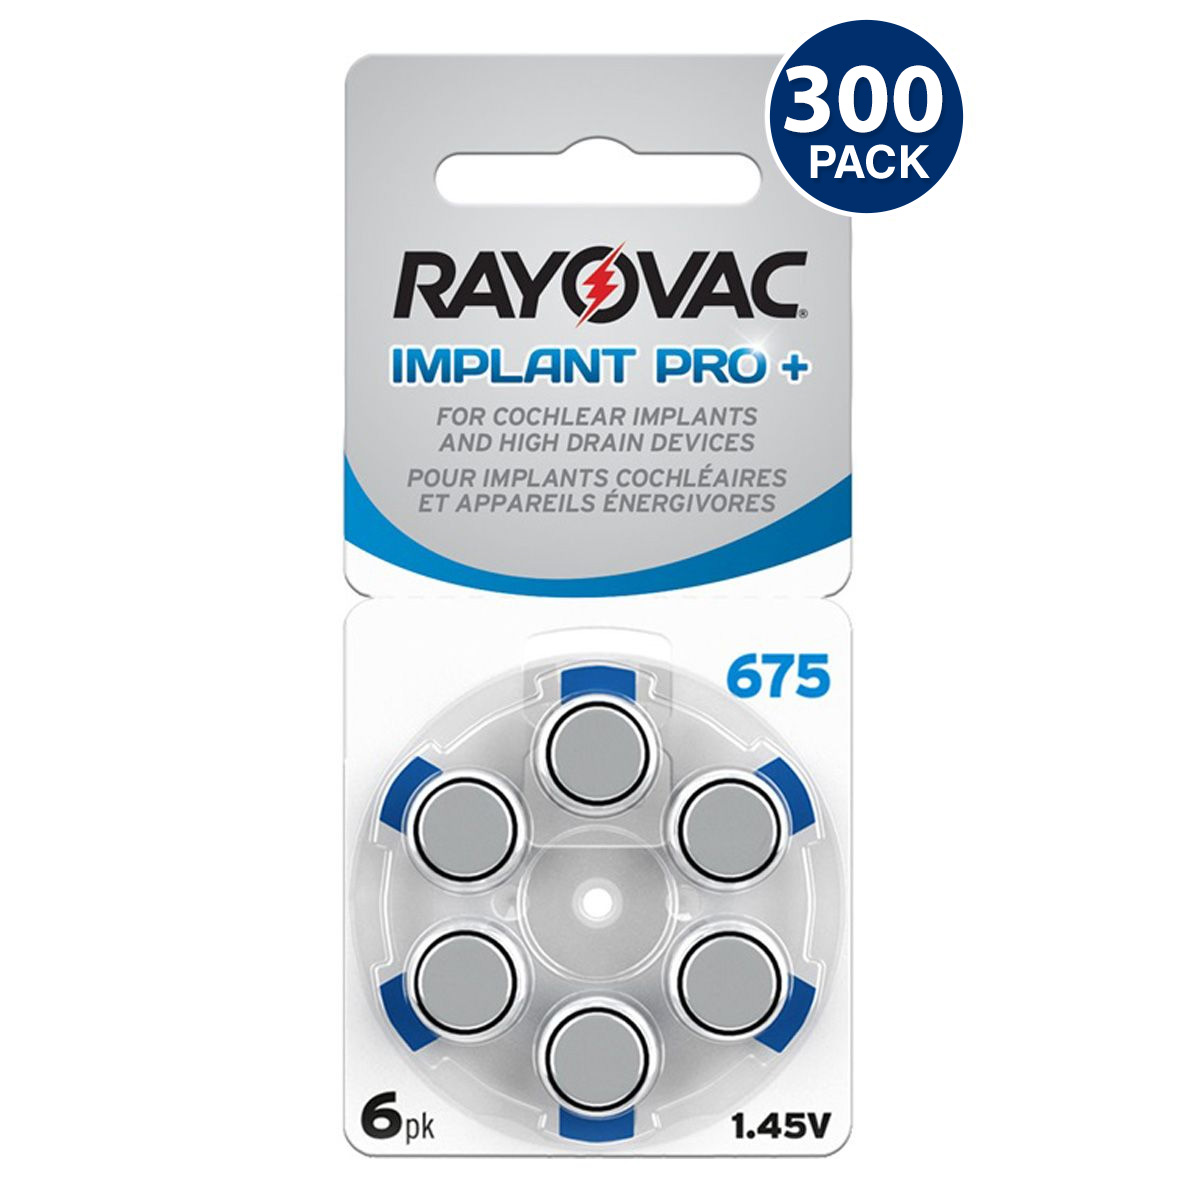 Rayovac Size 675 Cochlear Implant Pro+ Mercury Free Hearing Aid Battery (300 pcs)